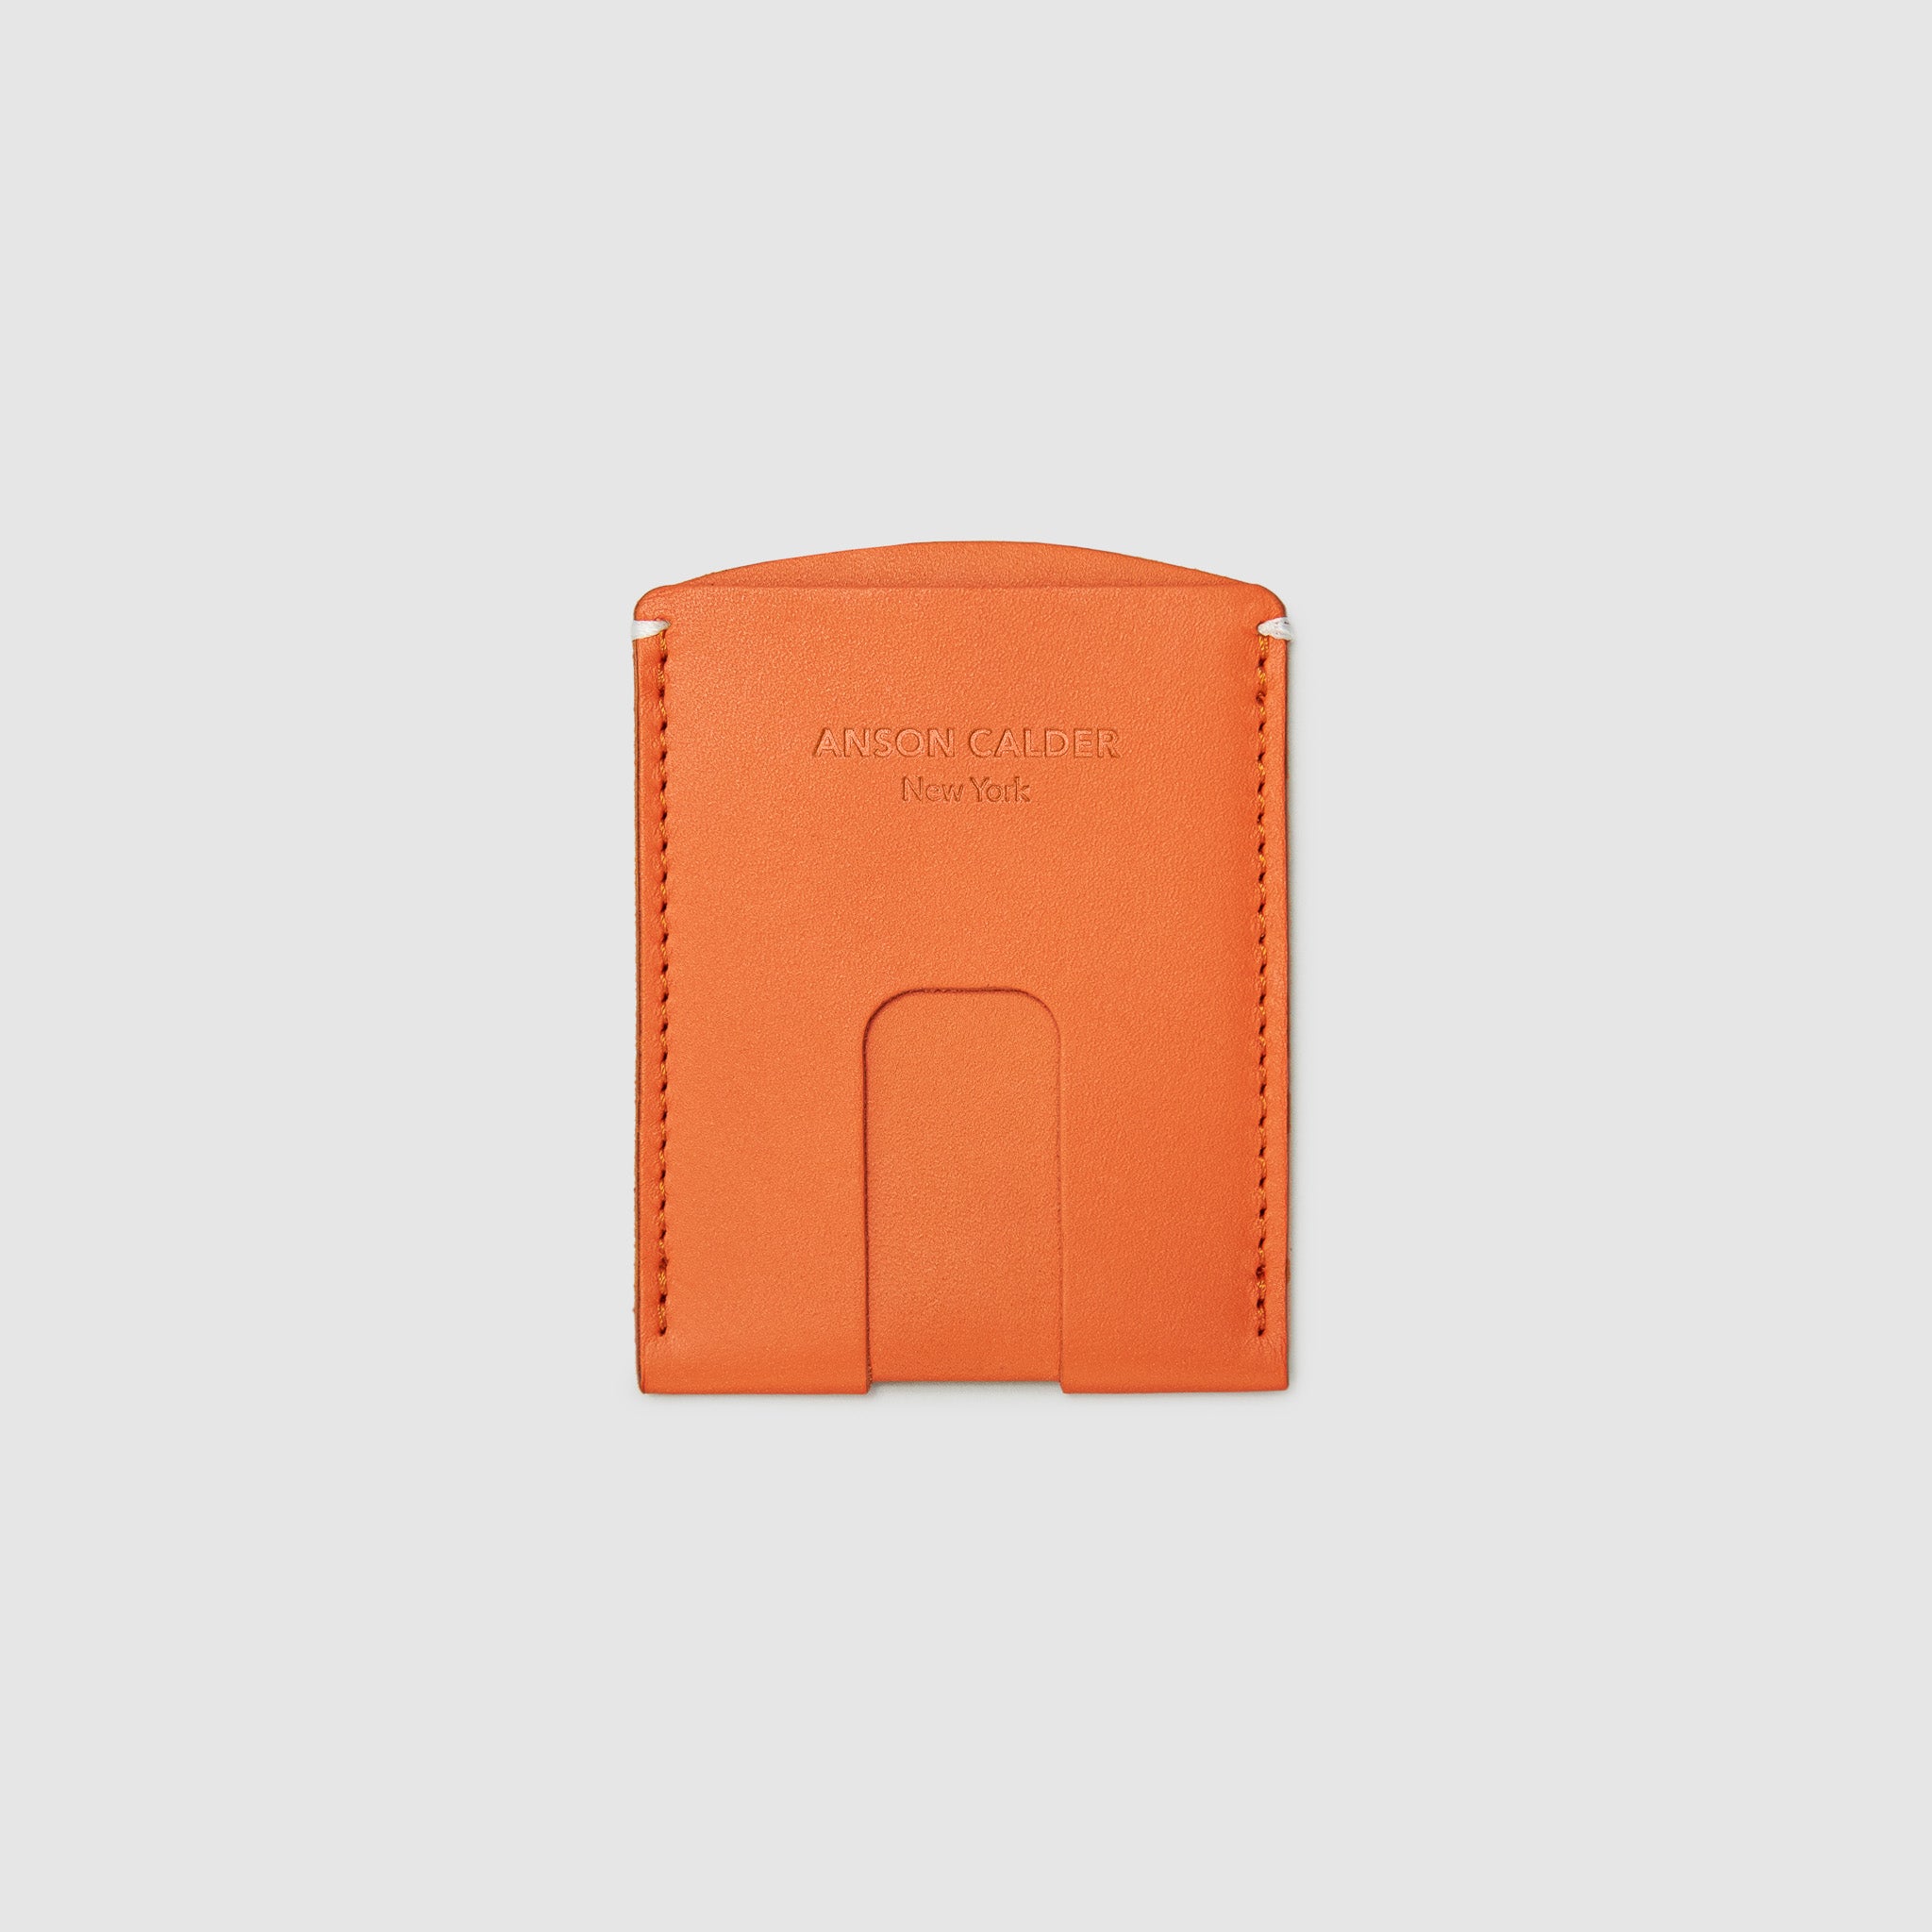 Anson Calder Card Holder Wallet french calfskin leather _fshd-orange